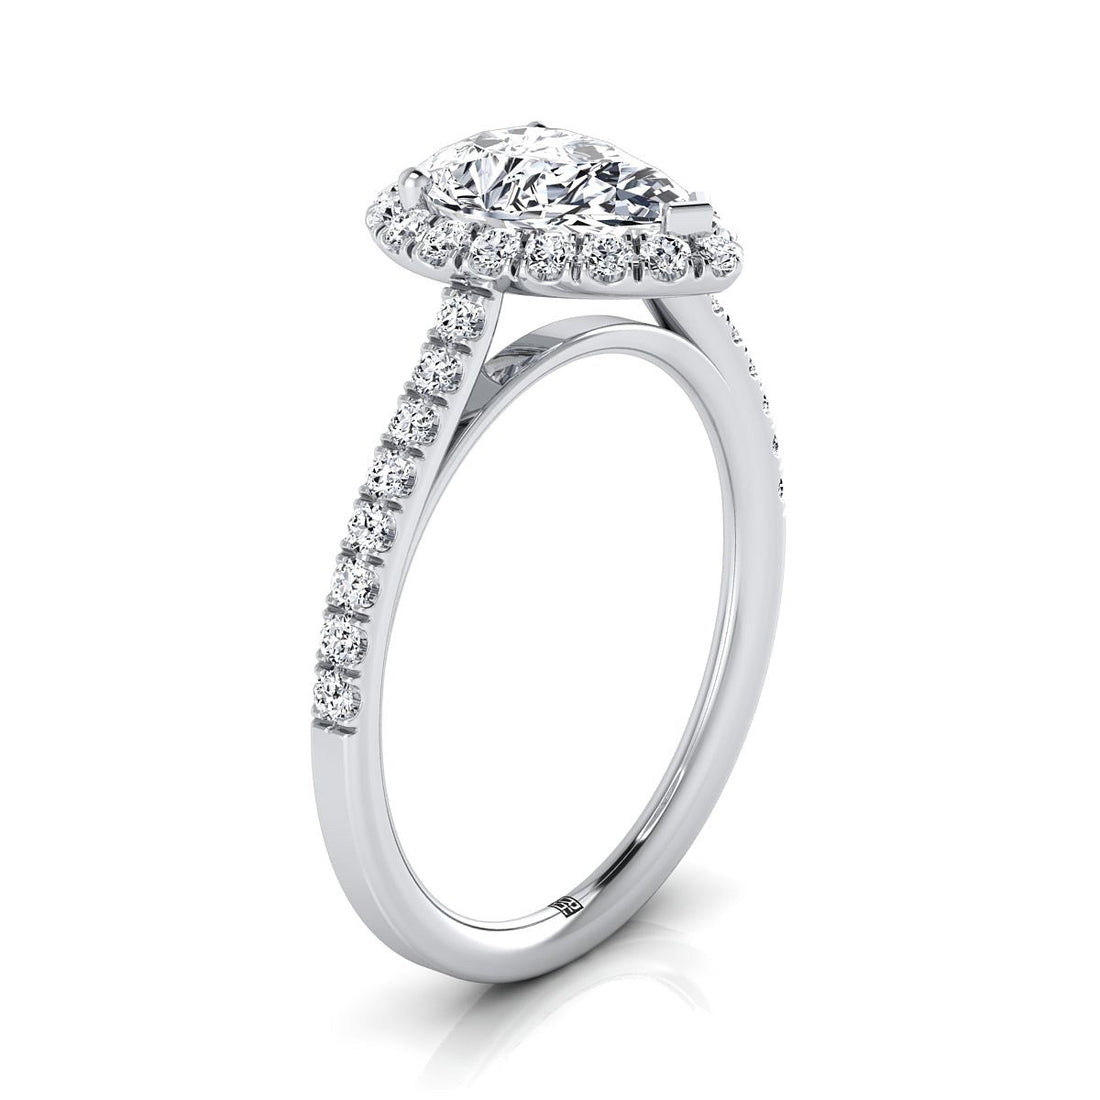 Tips for Buying Amazing Diamond Rings